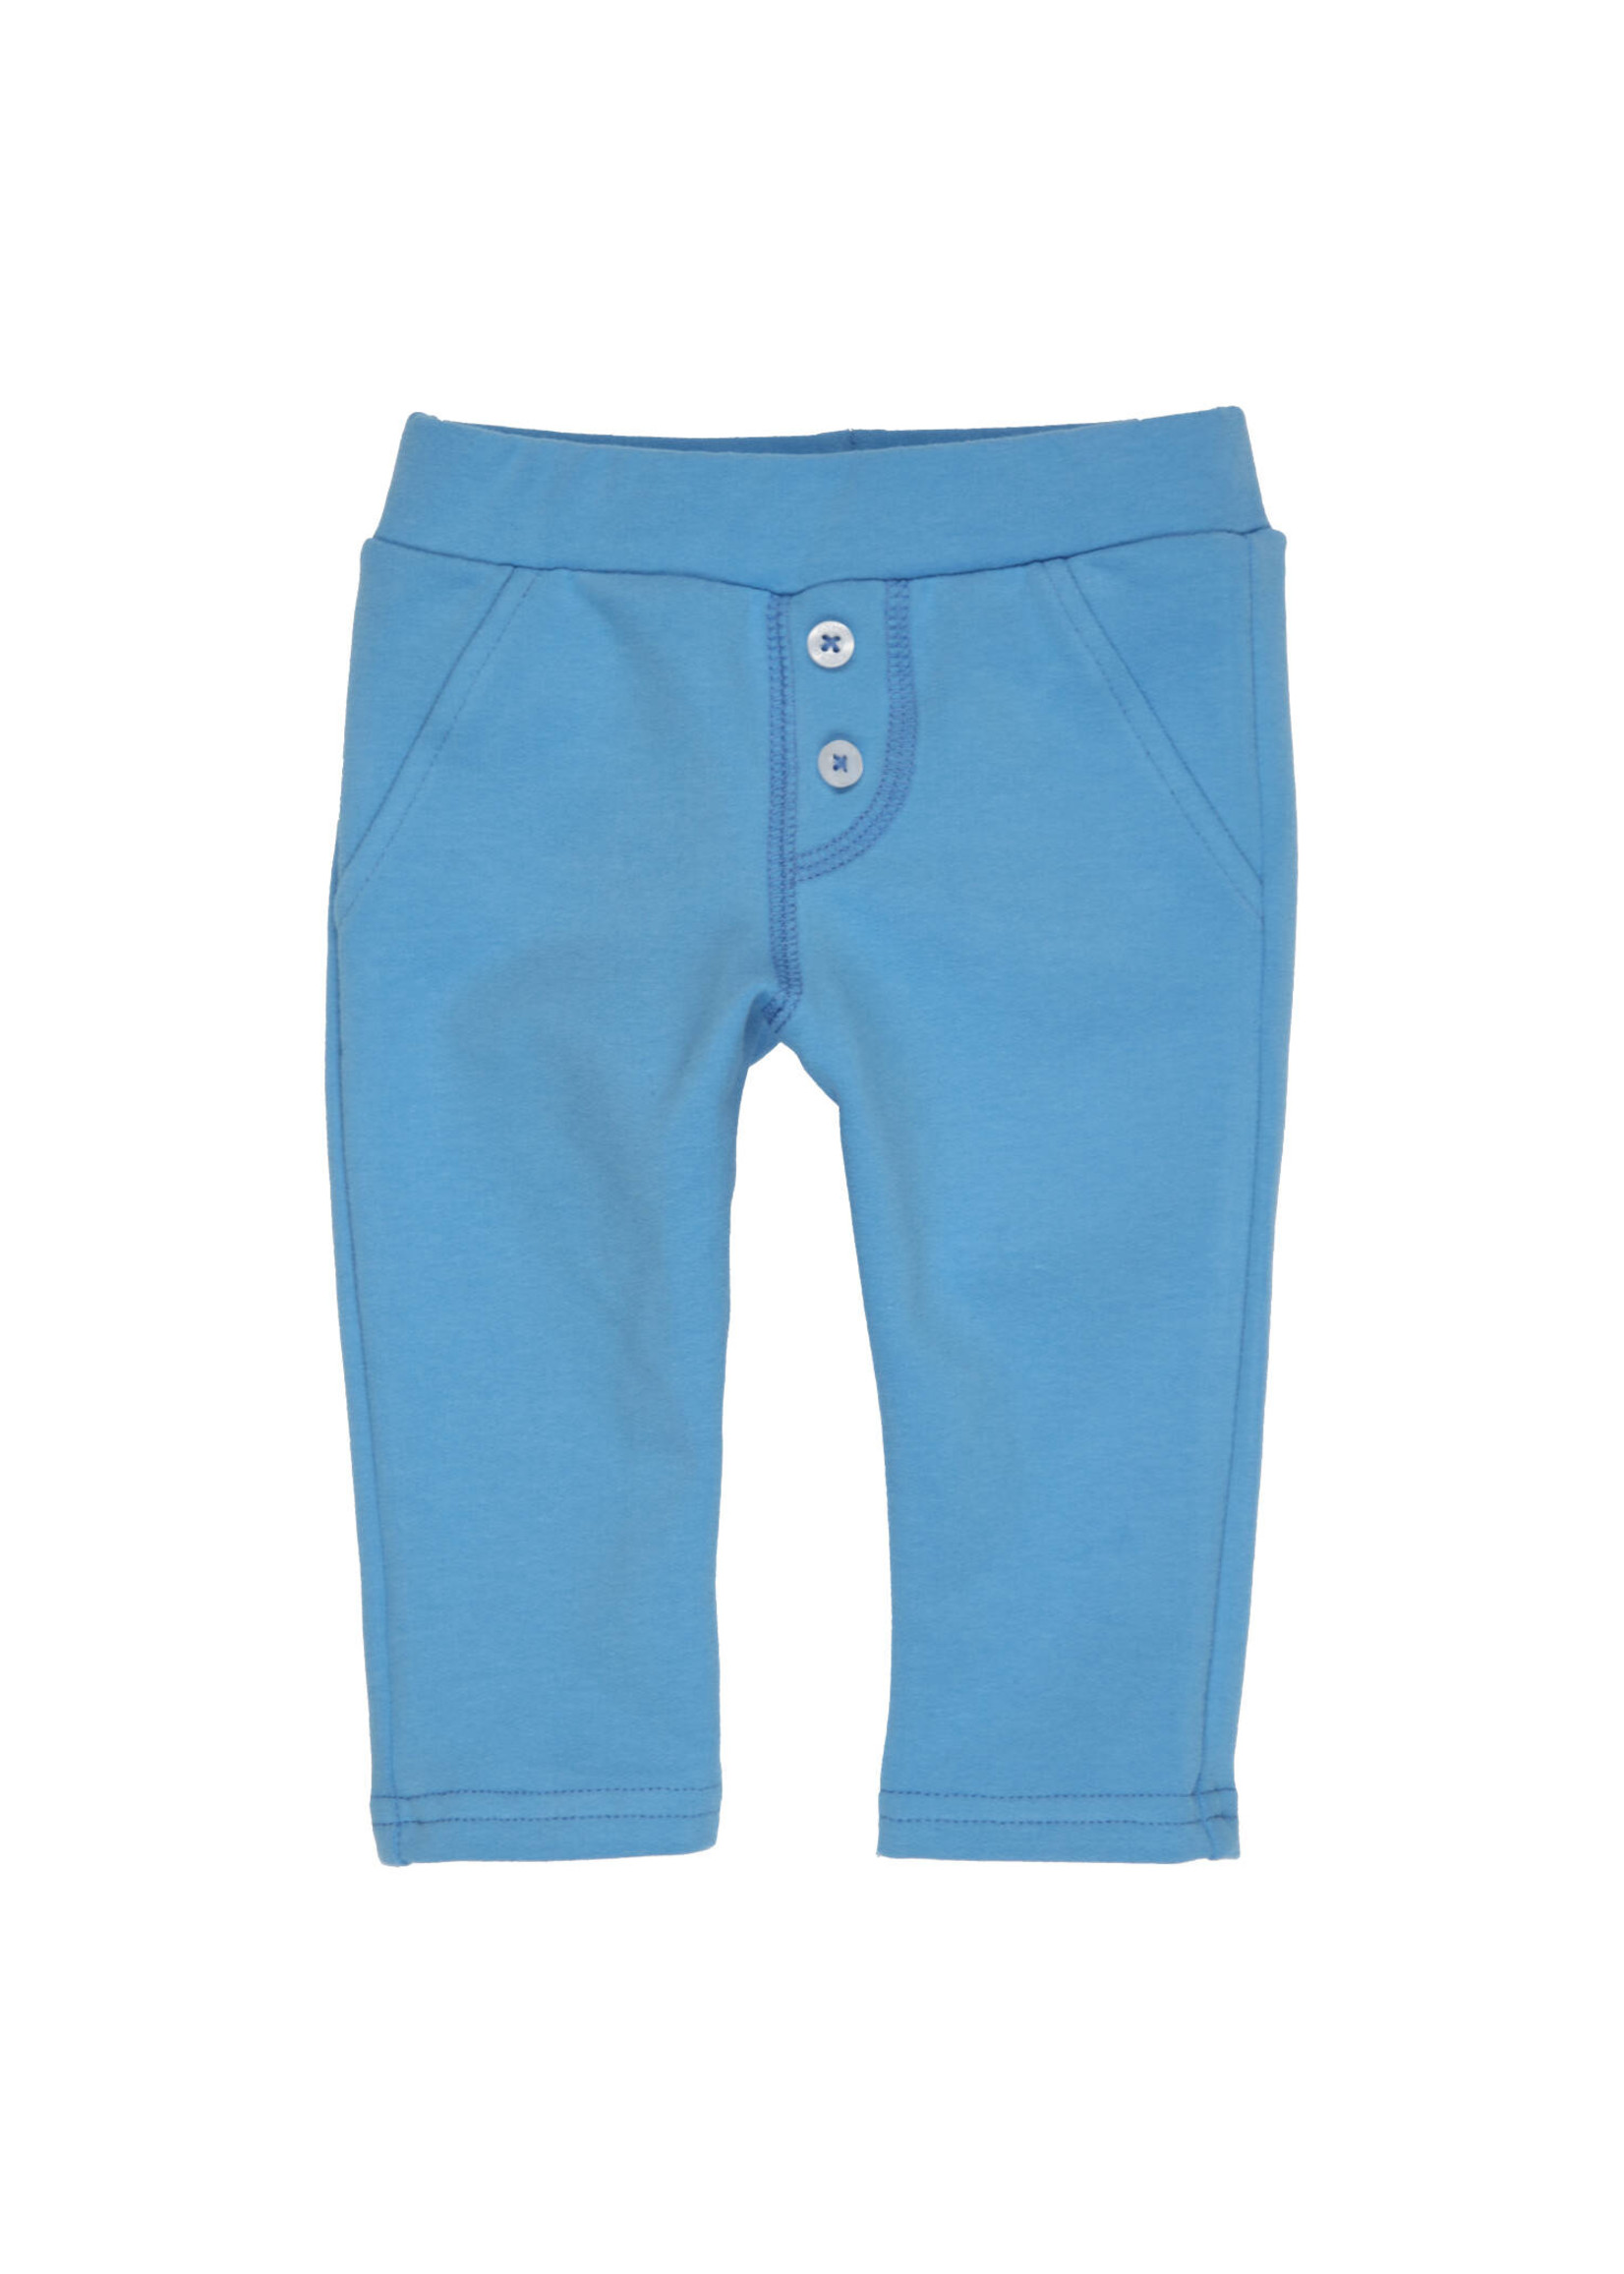 Gymp Trousers Carbon Blue 410-3348-20